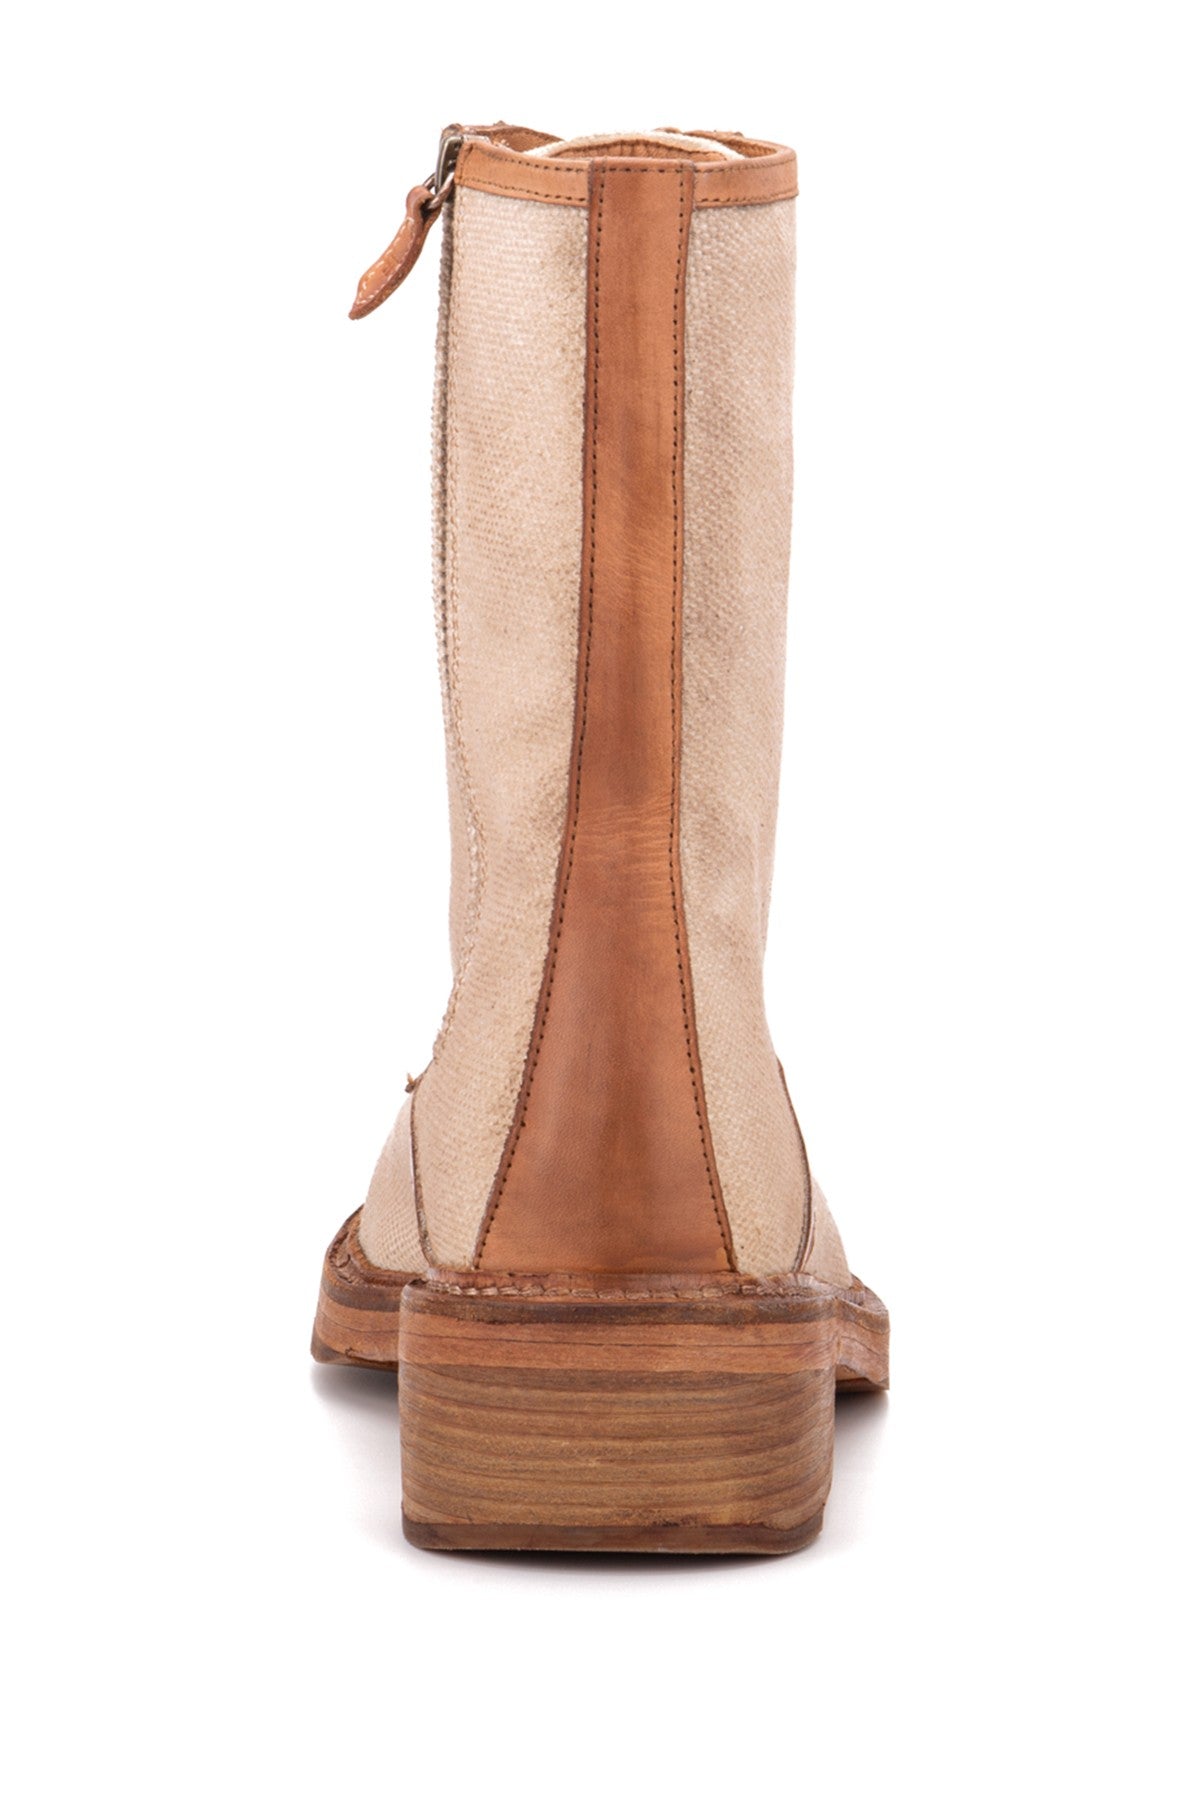 Vintage Foundry Delia Boot - Size 6/6.5